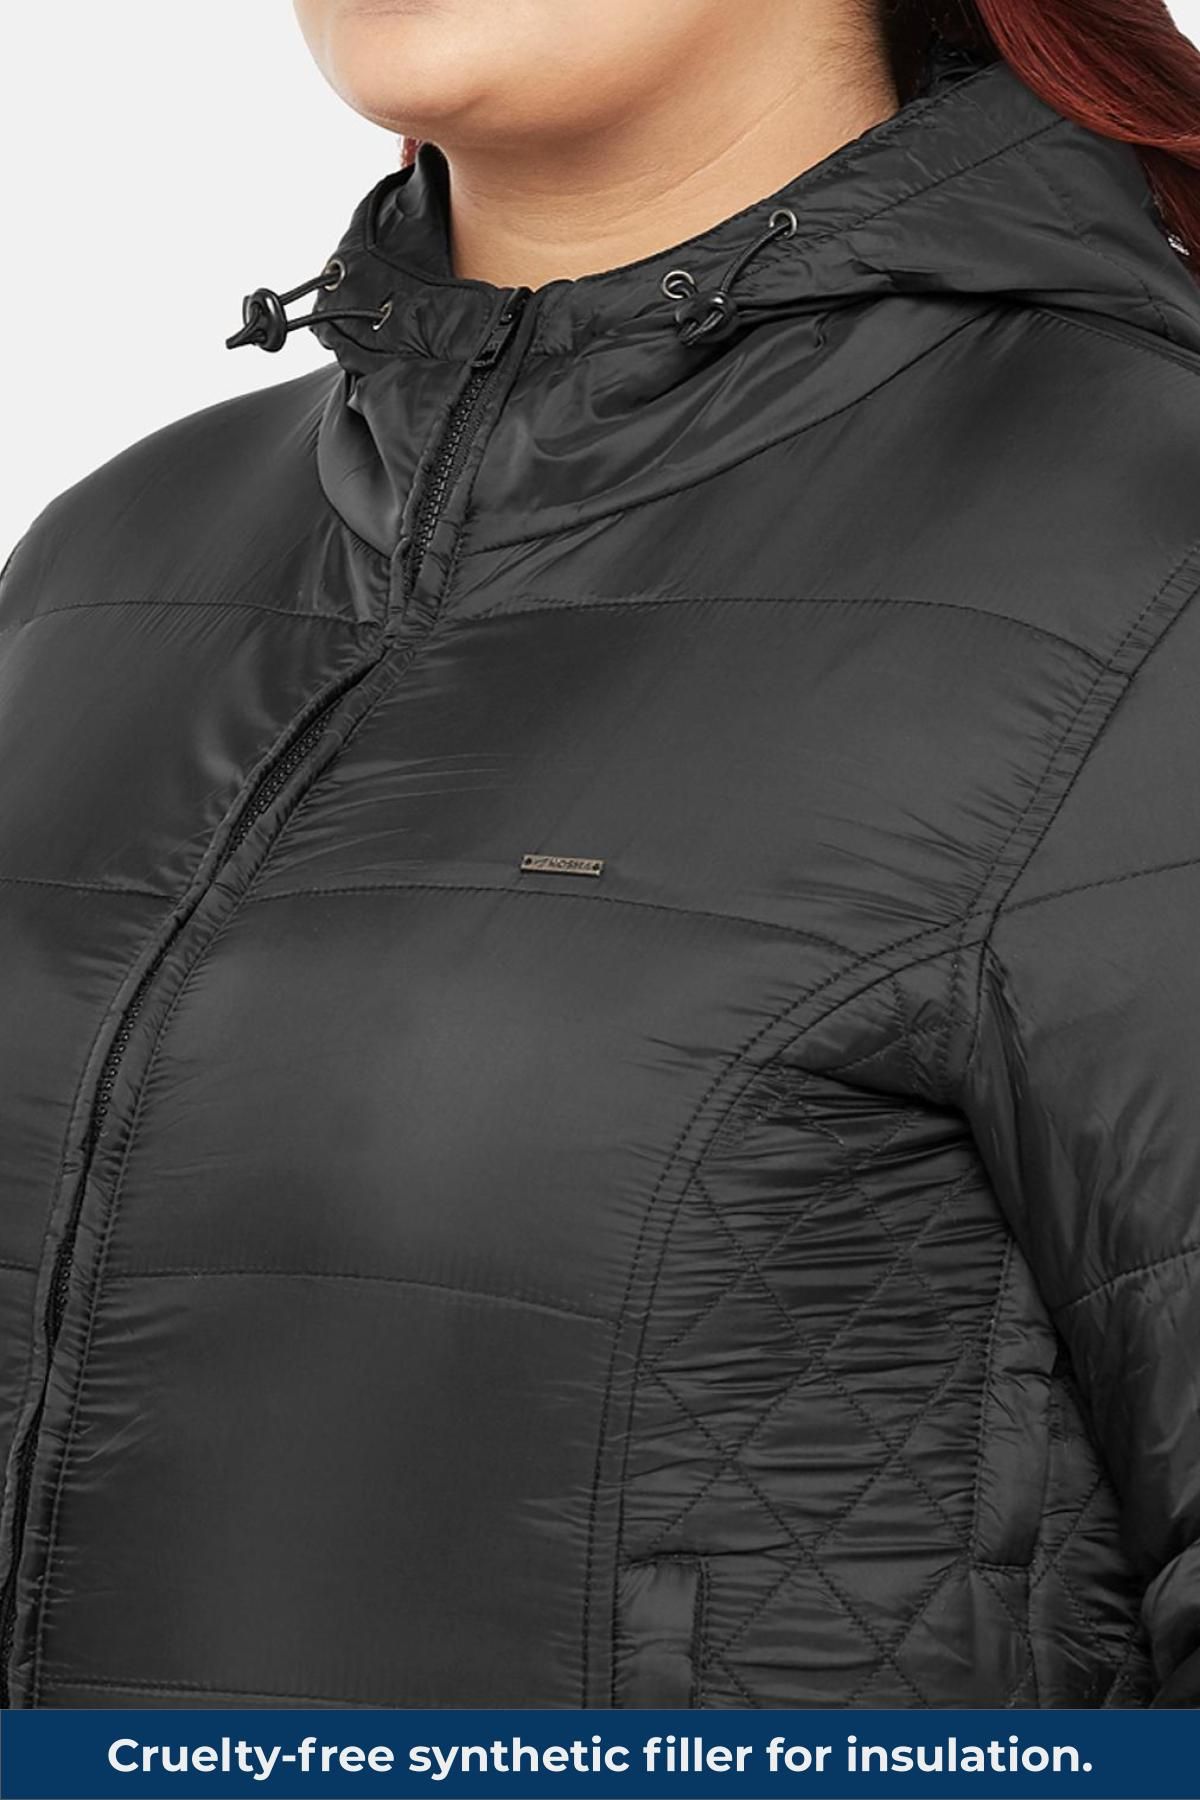 Black Plus Size Puffer Jacket | Women